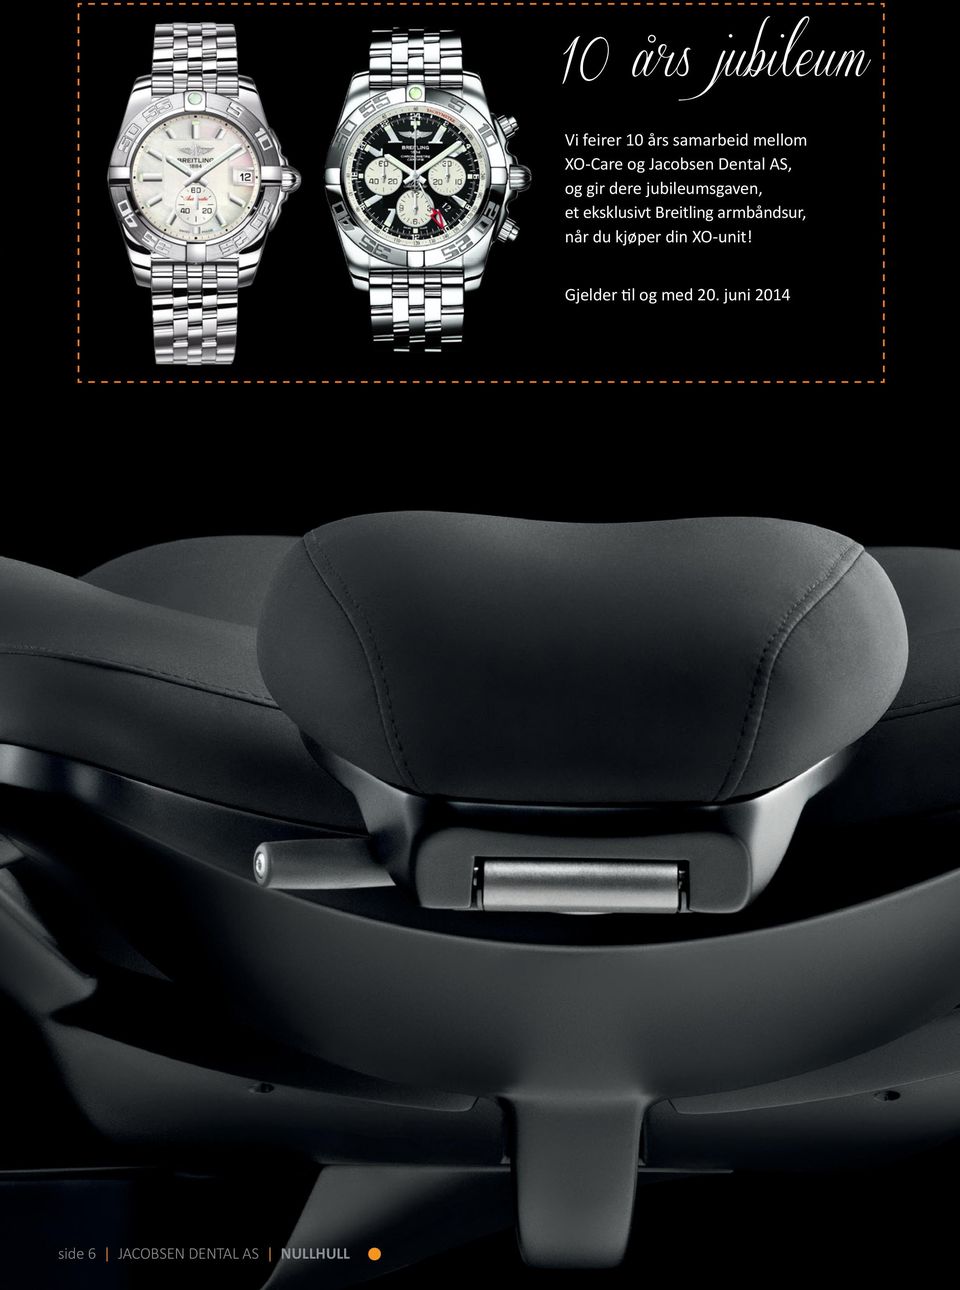 eksklusivt Breitling armbåndsur, når du kjøper din XO-unit!